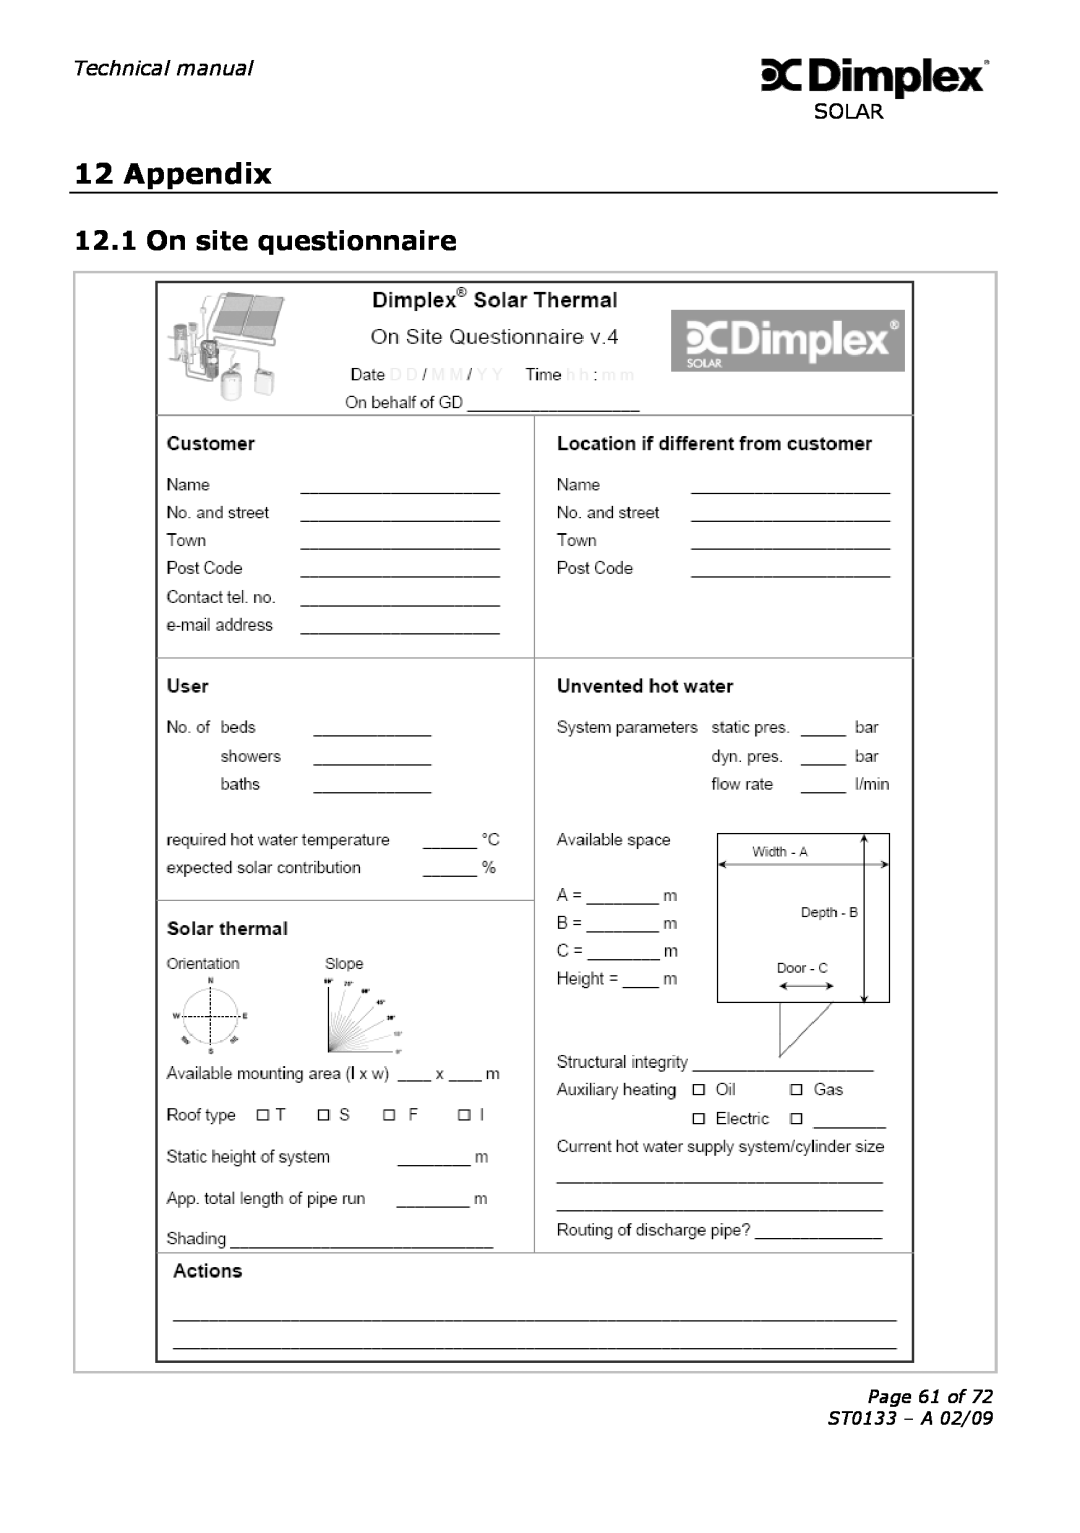 Dimplex technical manual Appendix, On site questionnaire, Page 61 of ST0133 - A 02/09 